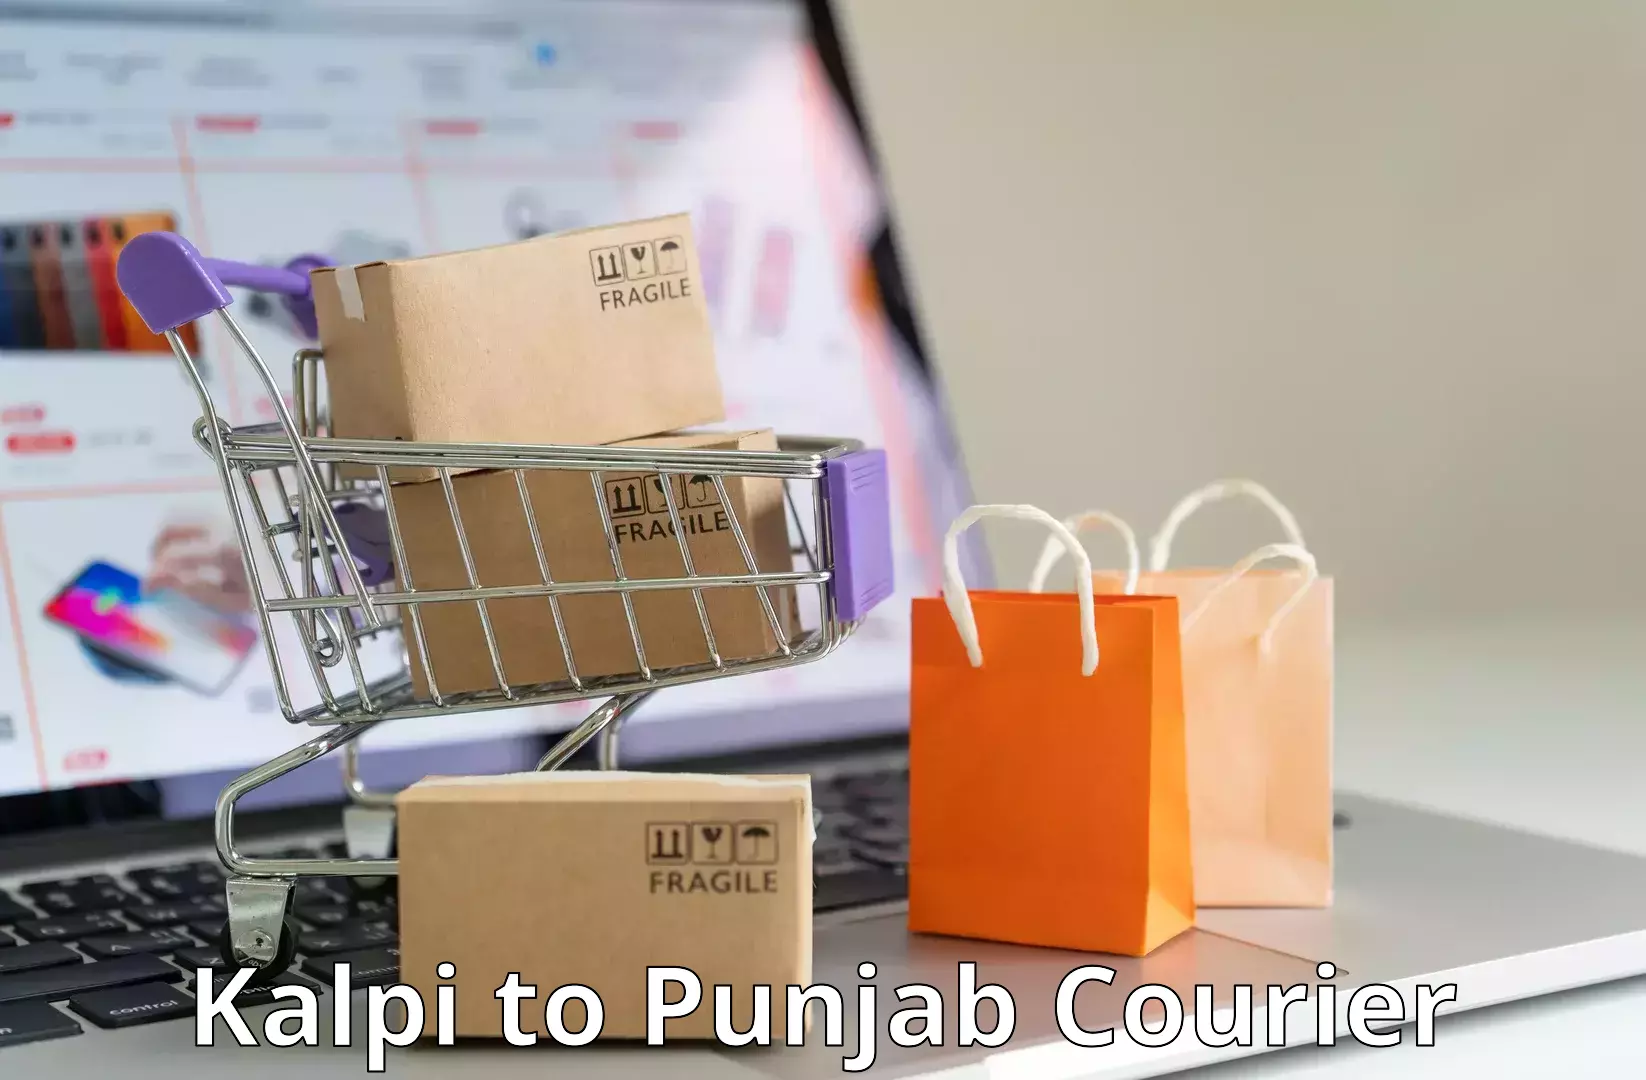 Courier insurance Kalpi to Amritsar